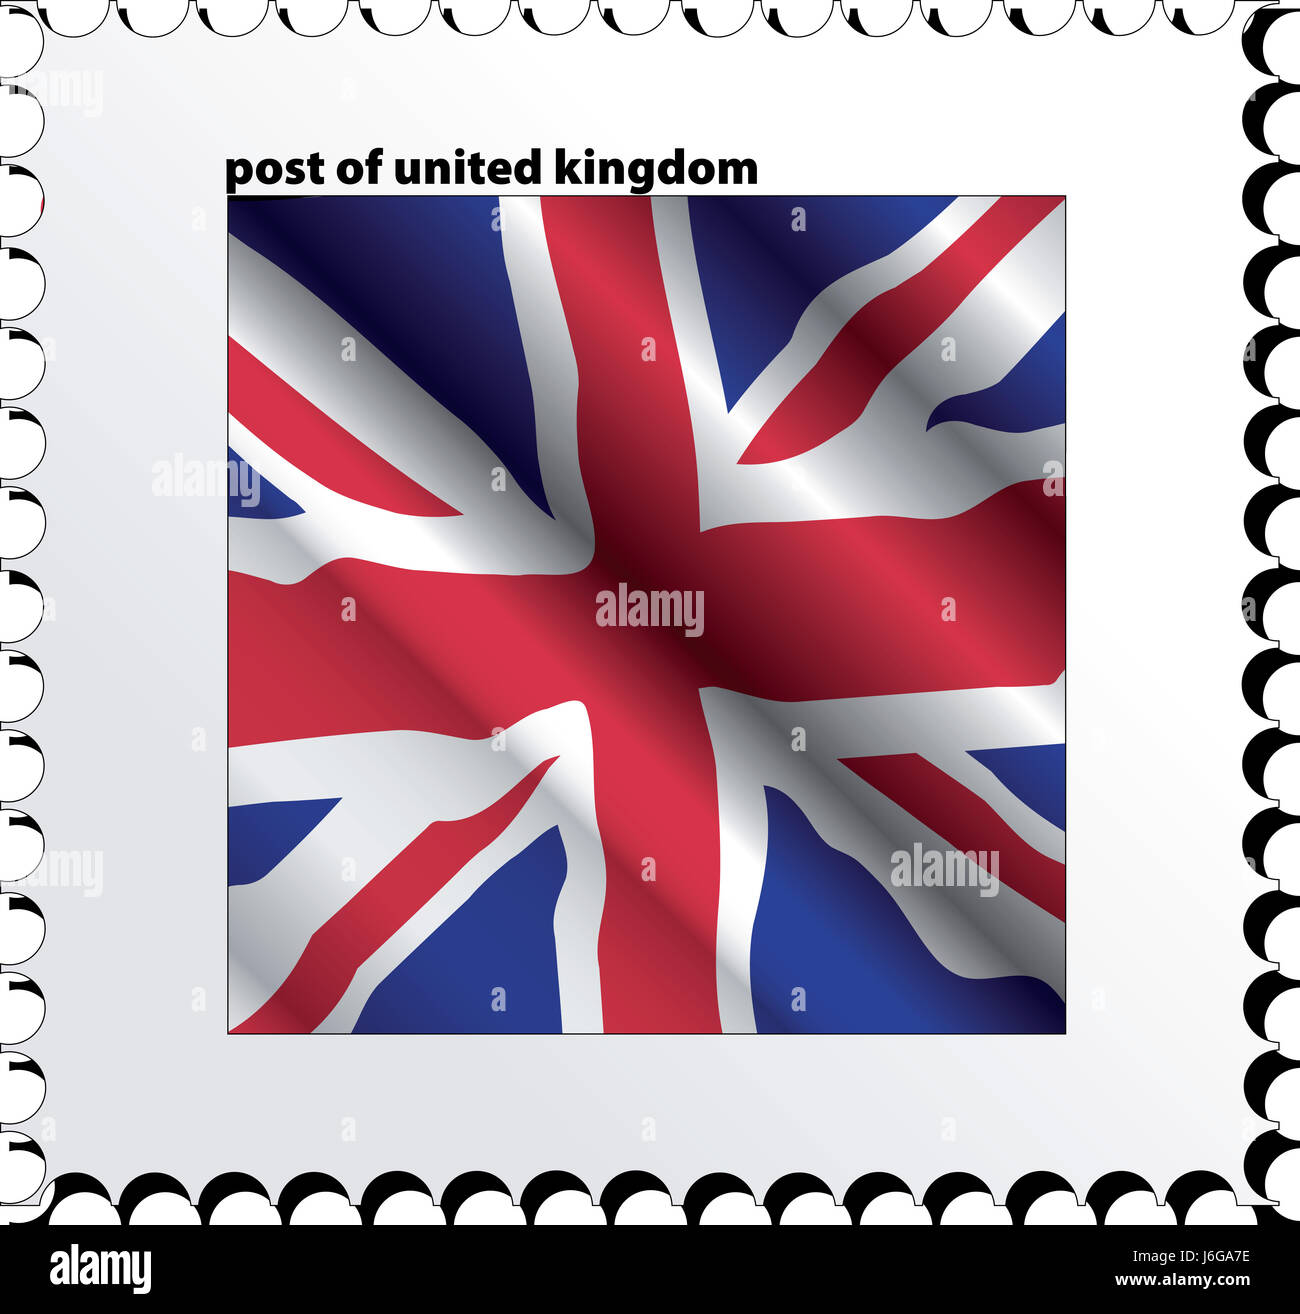 flag national united kingdom post stamp isolated illustration flag jack Stock Photo